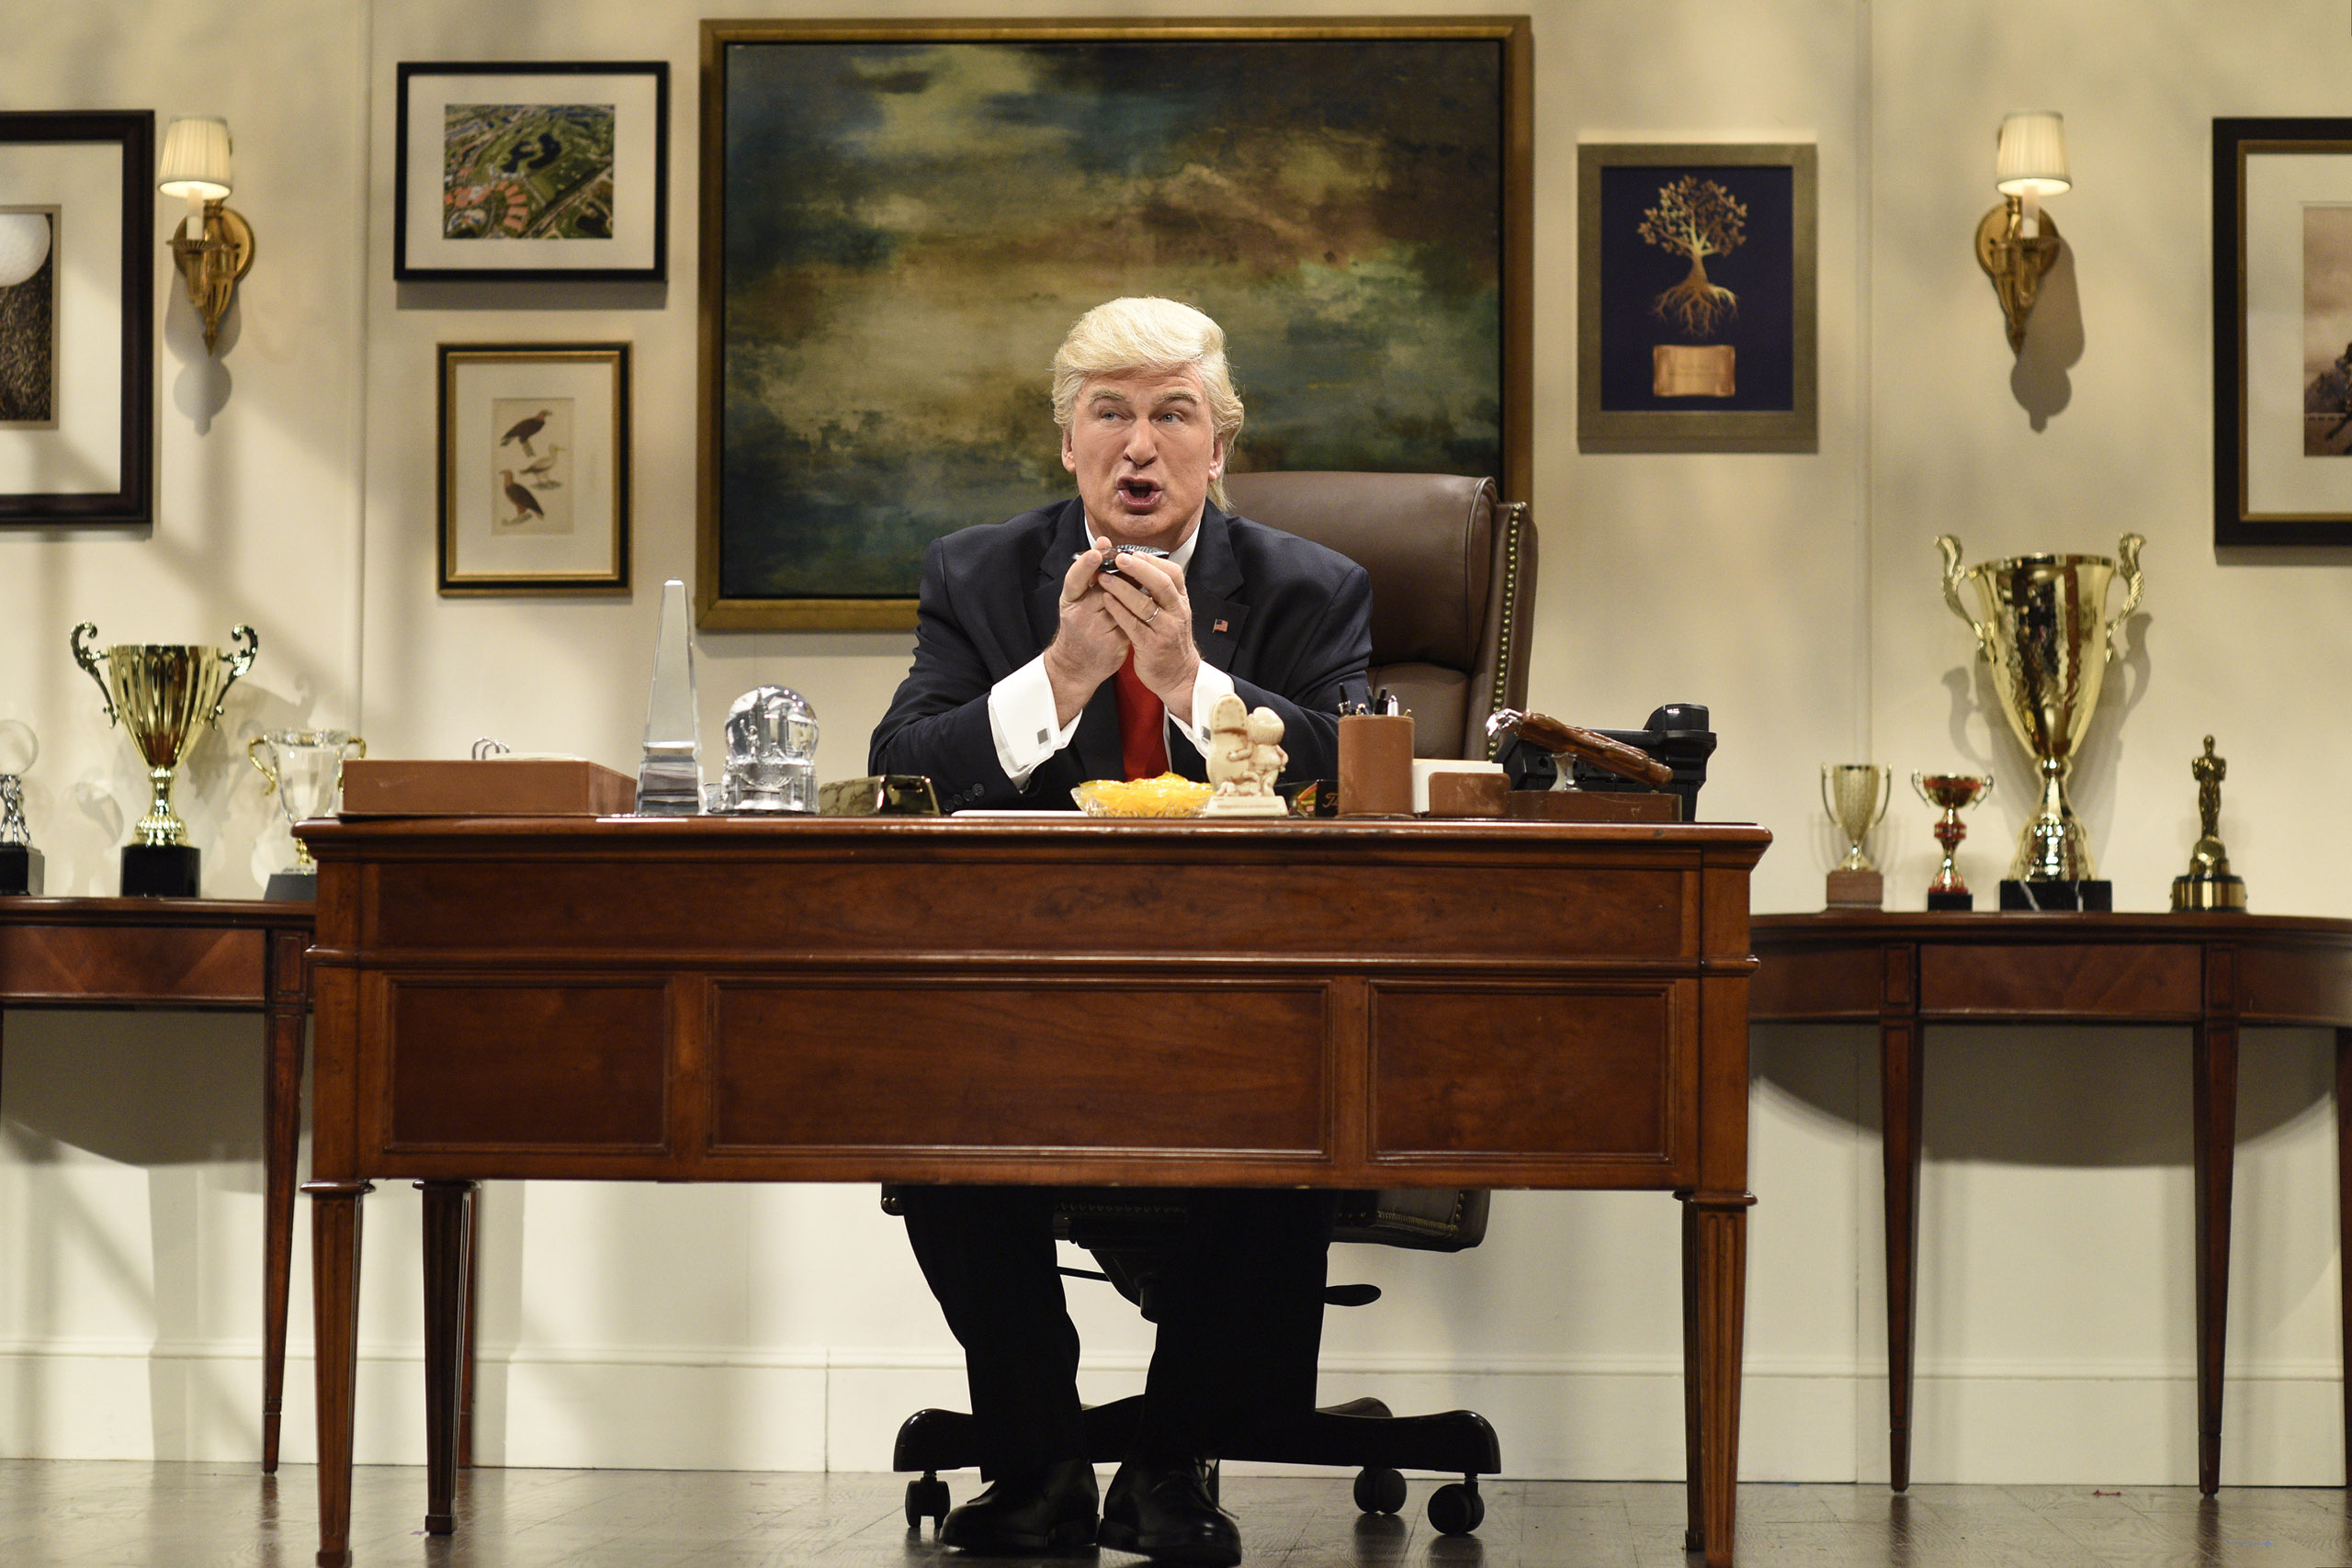 Alec Baldwin as Donald Trump during the "Donald Trump Prepares Cold Open" sketch on Nov. 19, 2016 (NBC/NBCU Photo Bank/Getty Images)